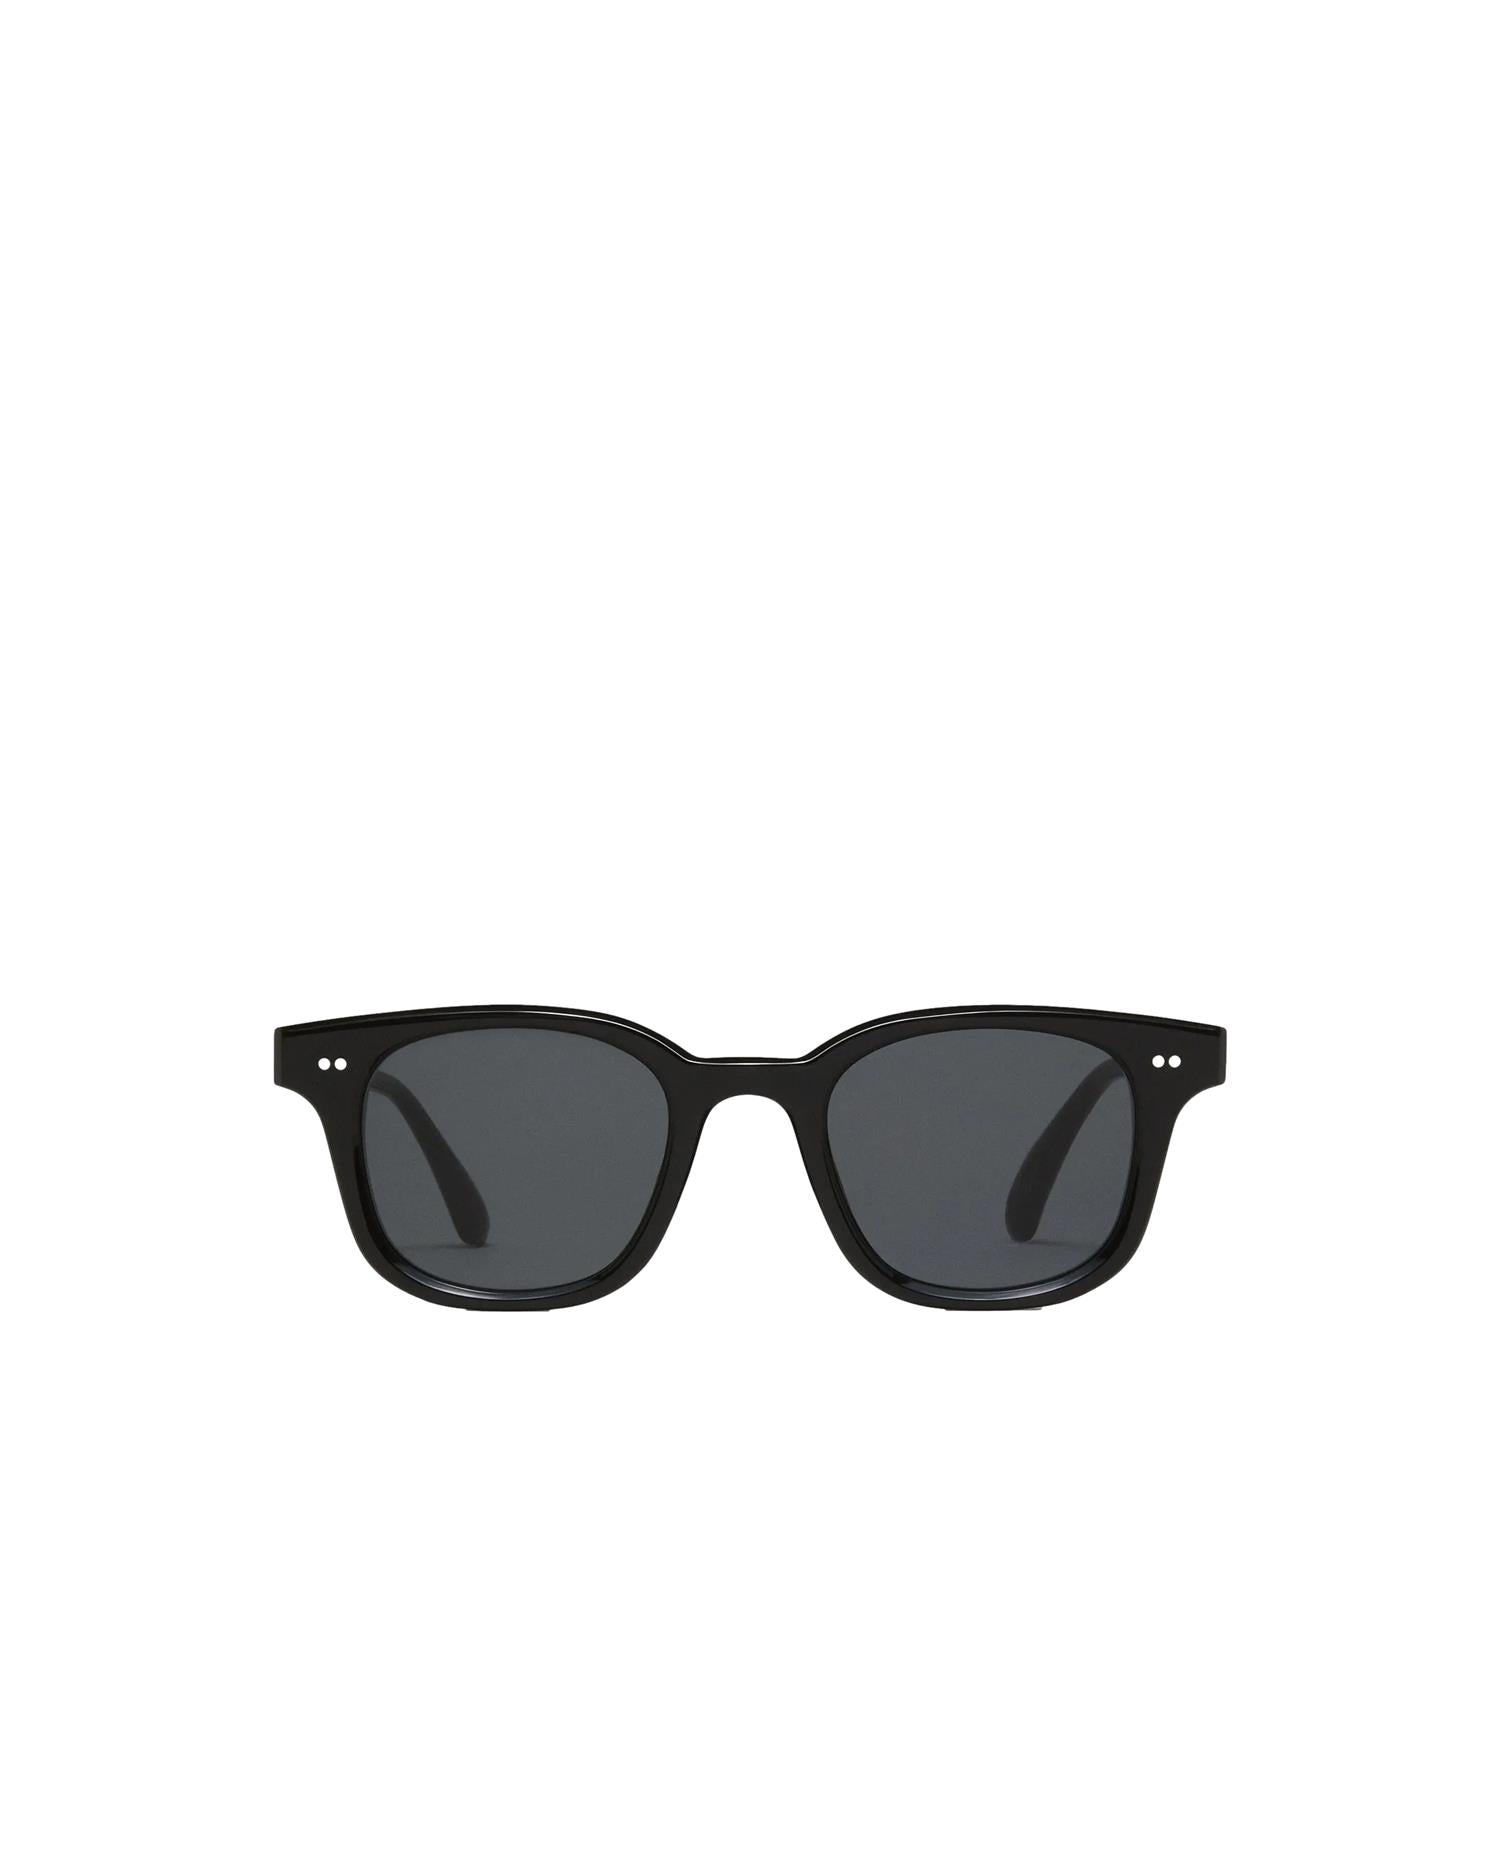 Chimi Eyewear Black 02 Core Solbriller Sort